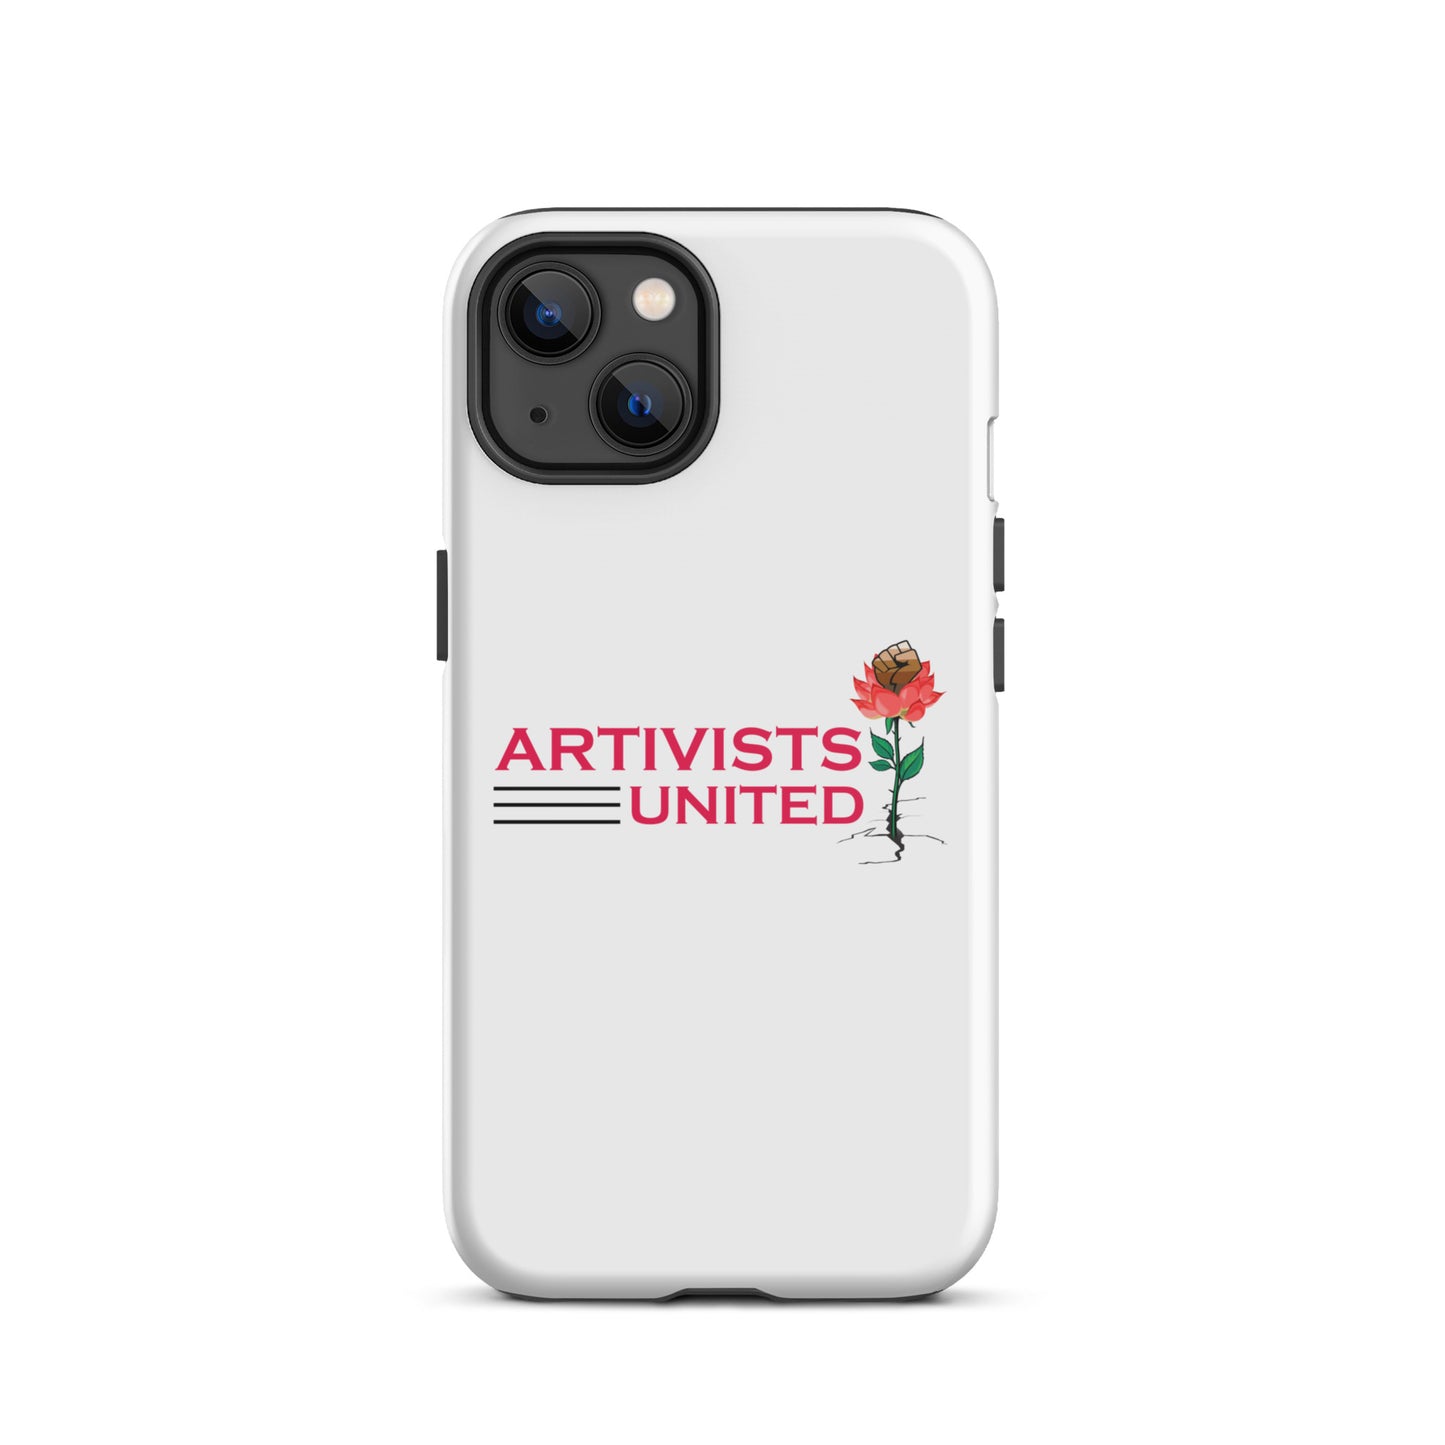 Artivists United Iphone case